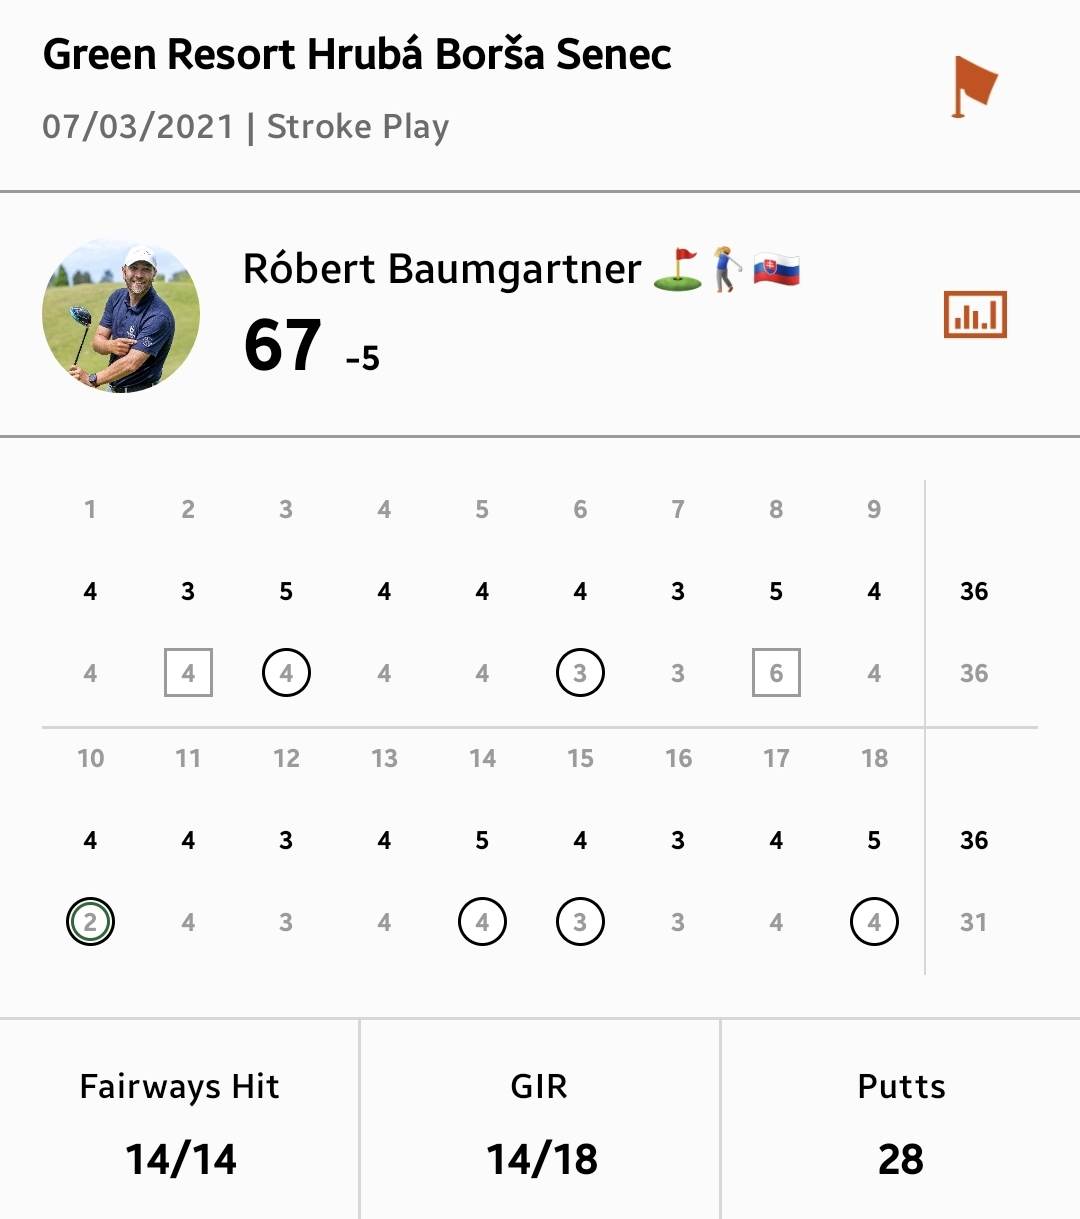 Róbert Baumgartner shots 67 (-5) - Best Tournament Golf Round in 2021 from yellow tees in Hruba Borša